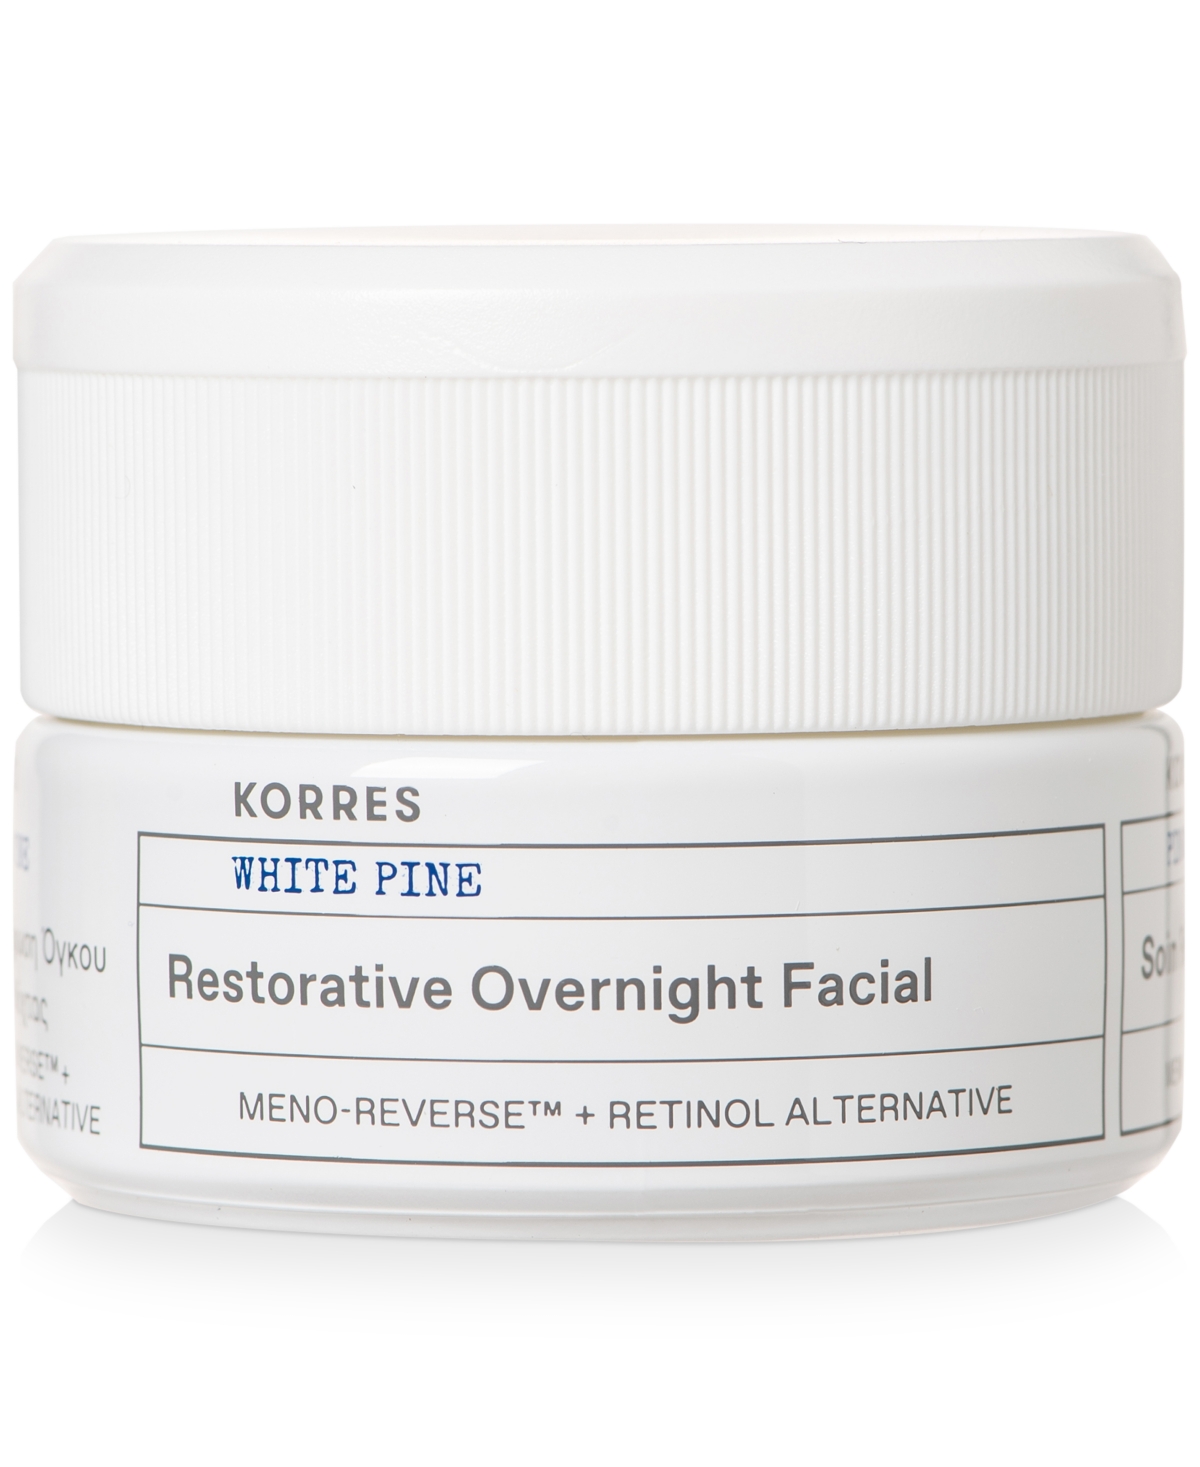 Korres White Pine Restorative Overnight Facial